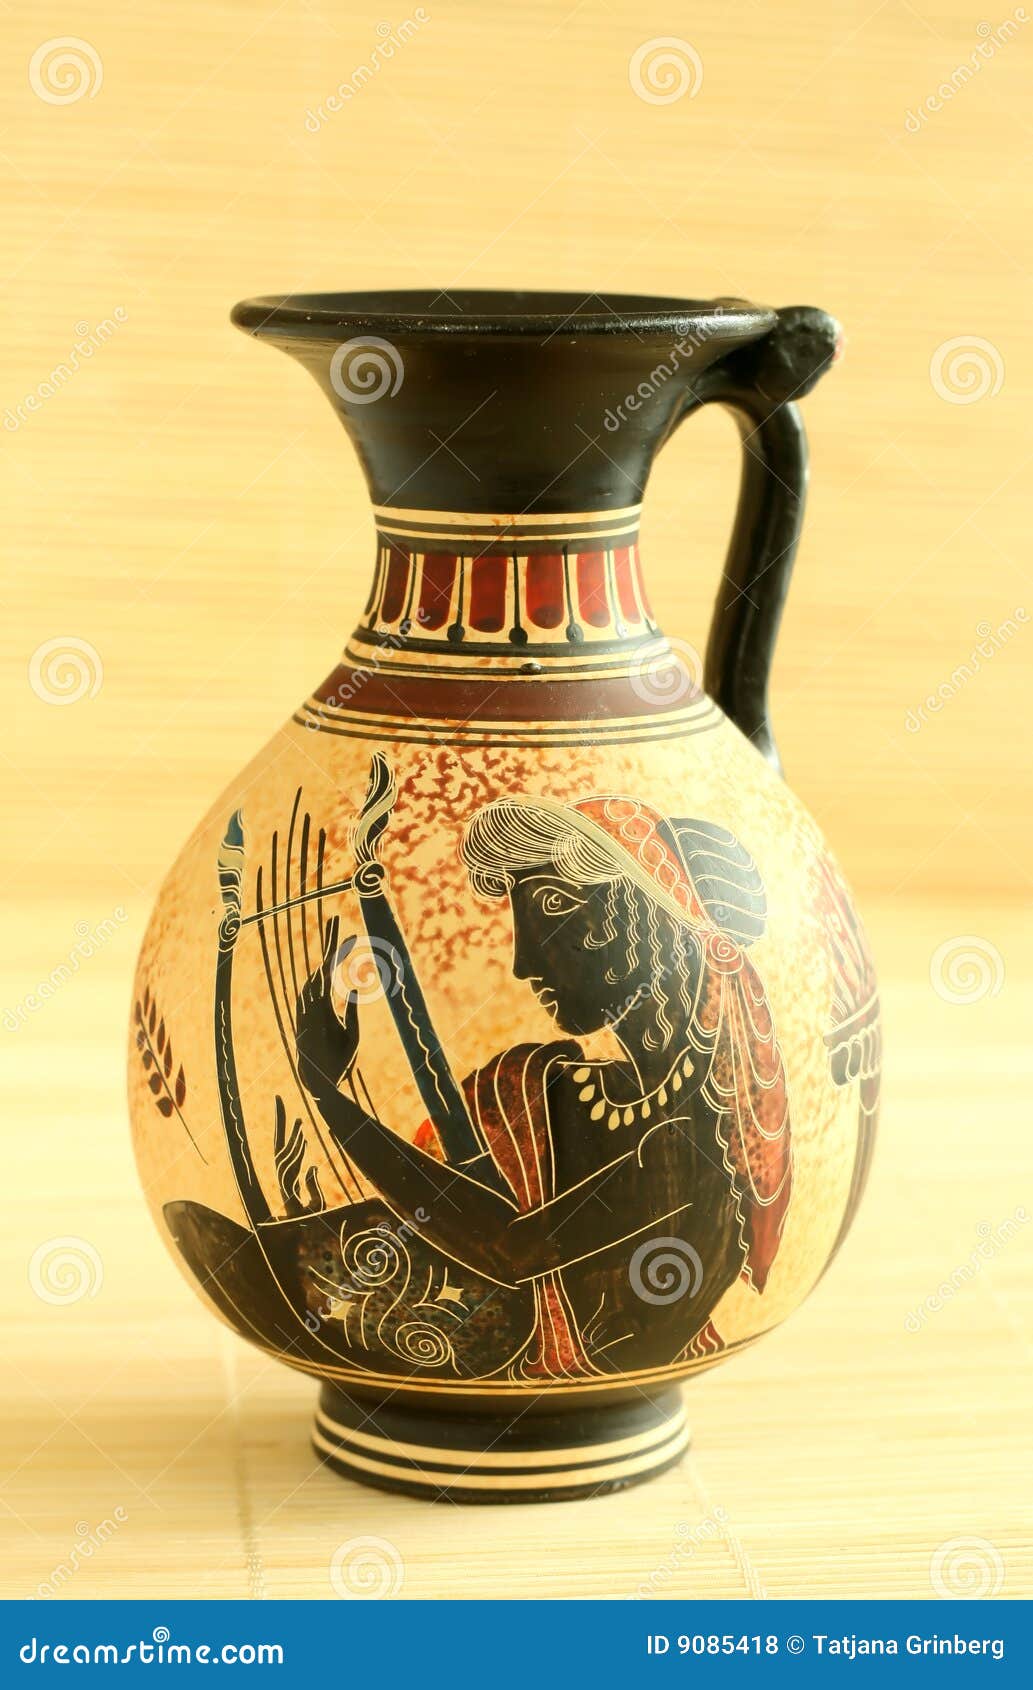 Nysgerrighed Inde Withered Egyptian decorative vase stock photo. Image of crock, cruet - 9085418